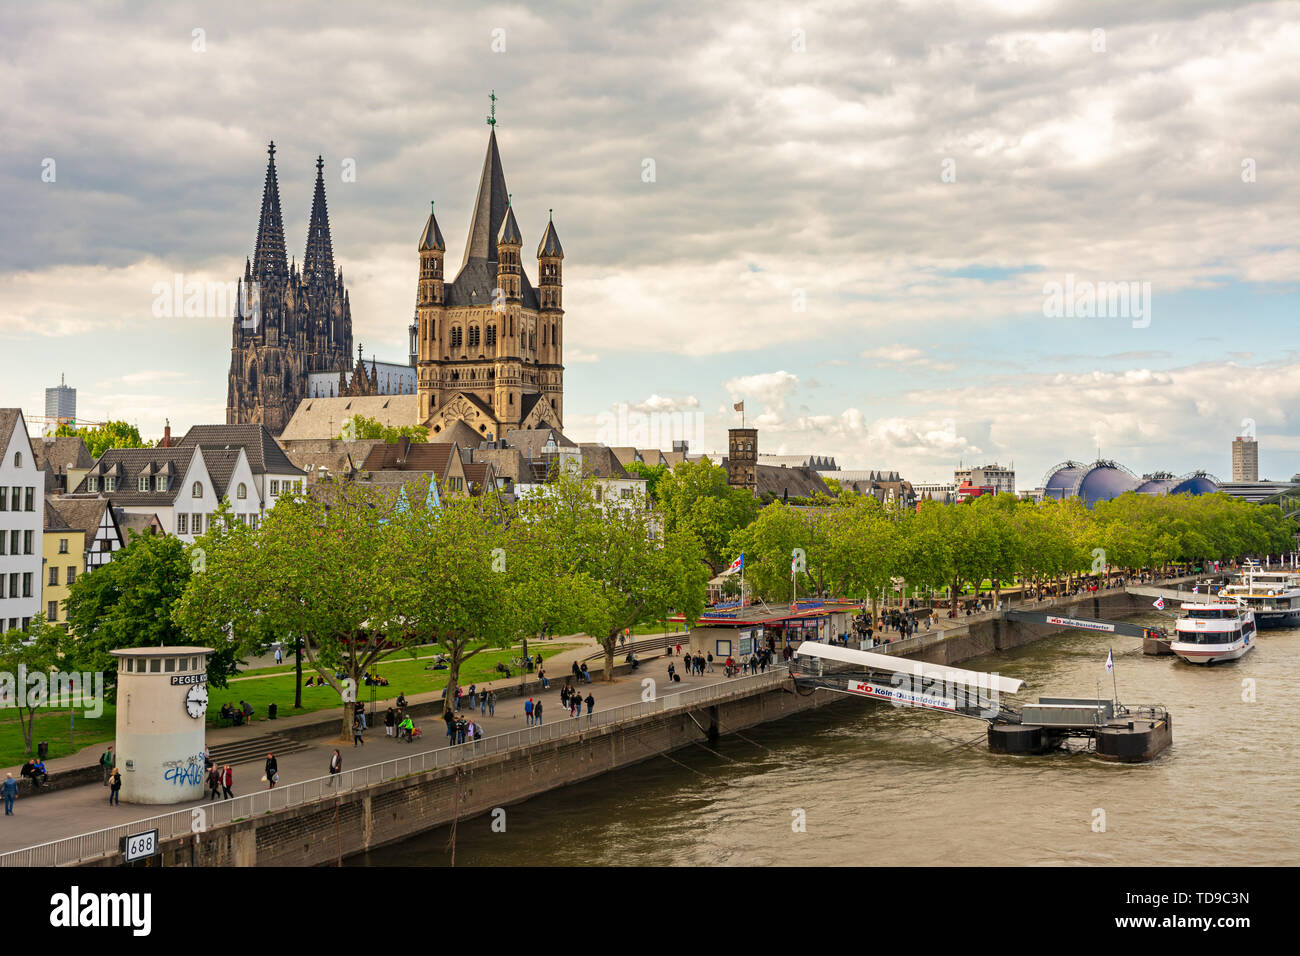 Köln, Deutschland - 12. Mai: Touristen am Rhein in Köln, Deutschland, am 12. Mai 2019. Blick auf den Kölner Dom und große Sain Martin Kirche. Stockfoto